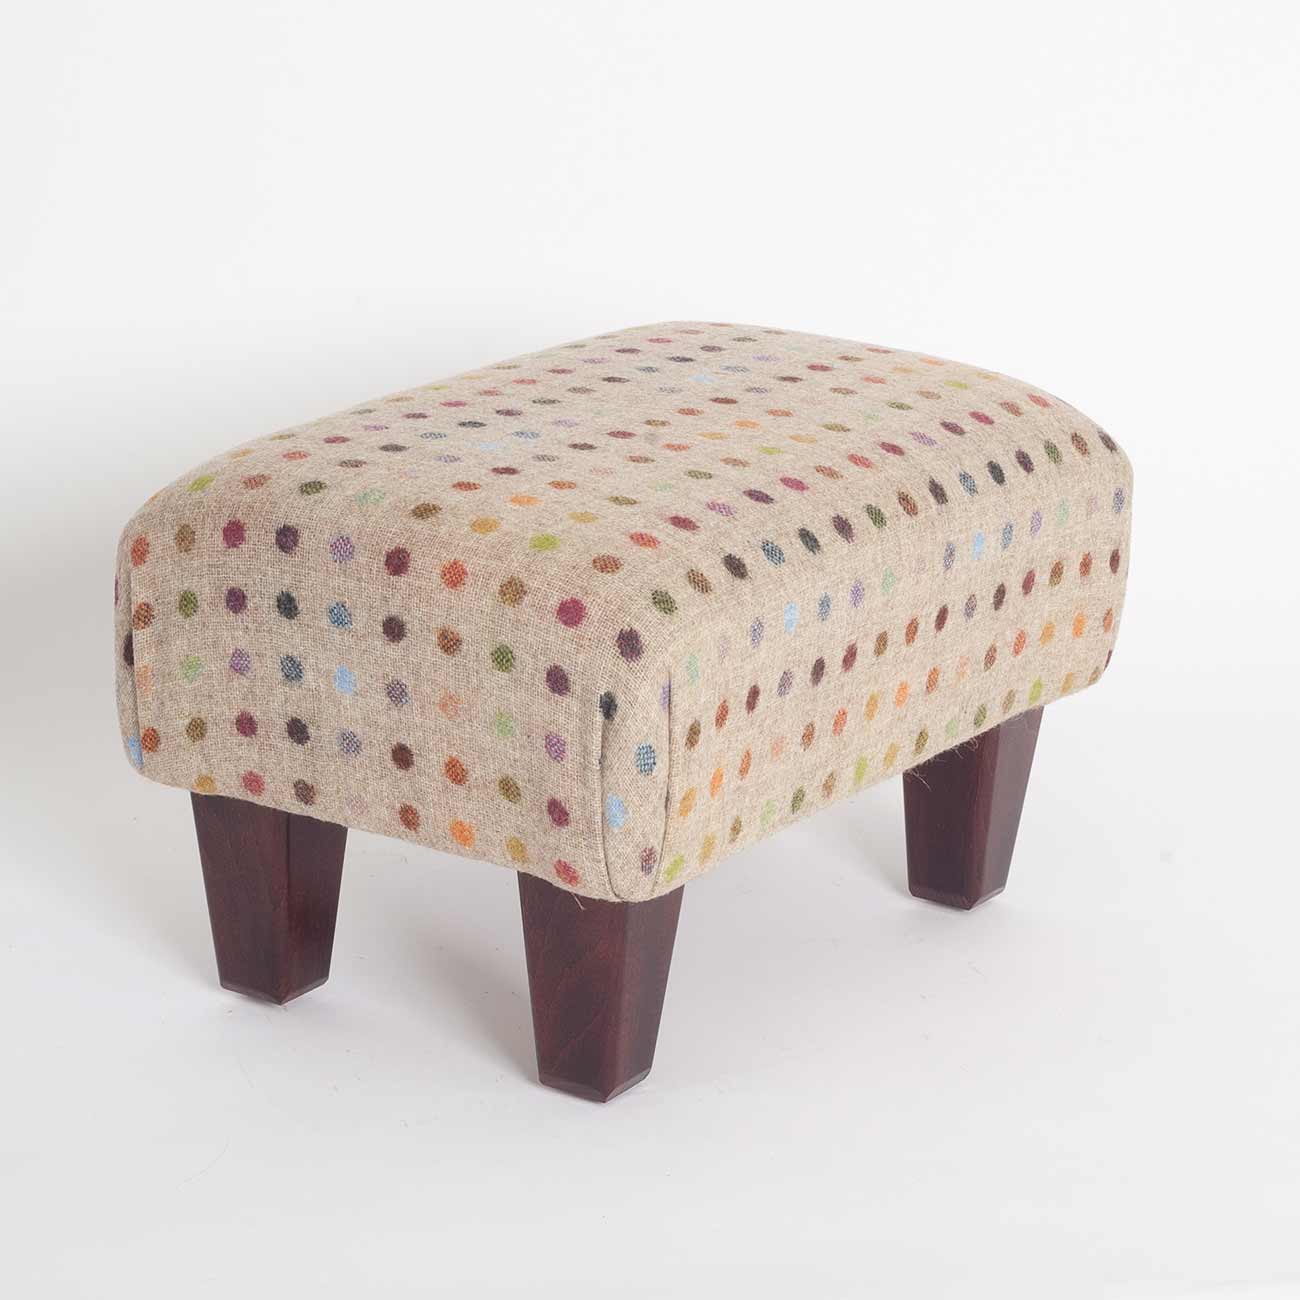 spotty-pattern-footstool12 fabric from JLP